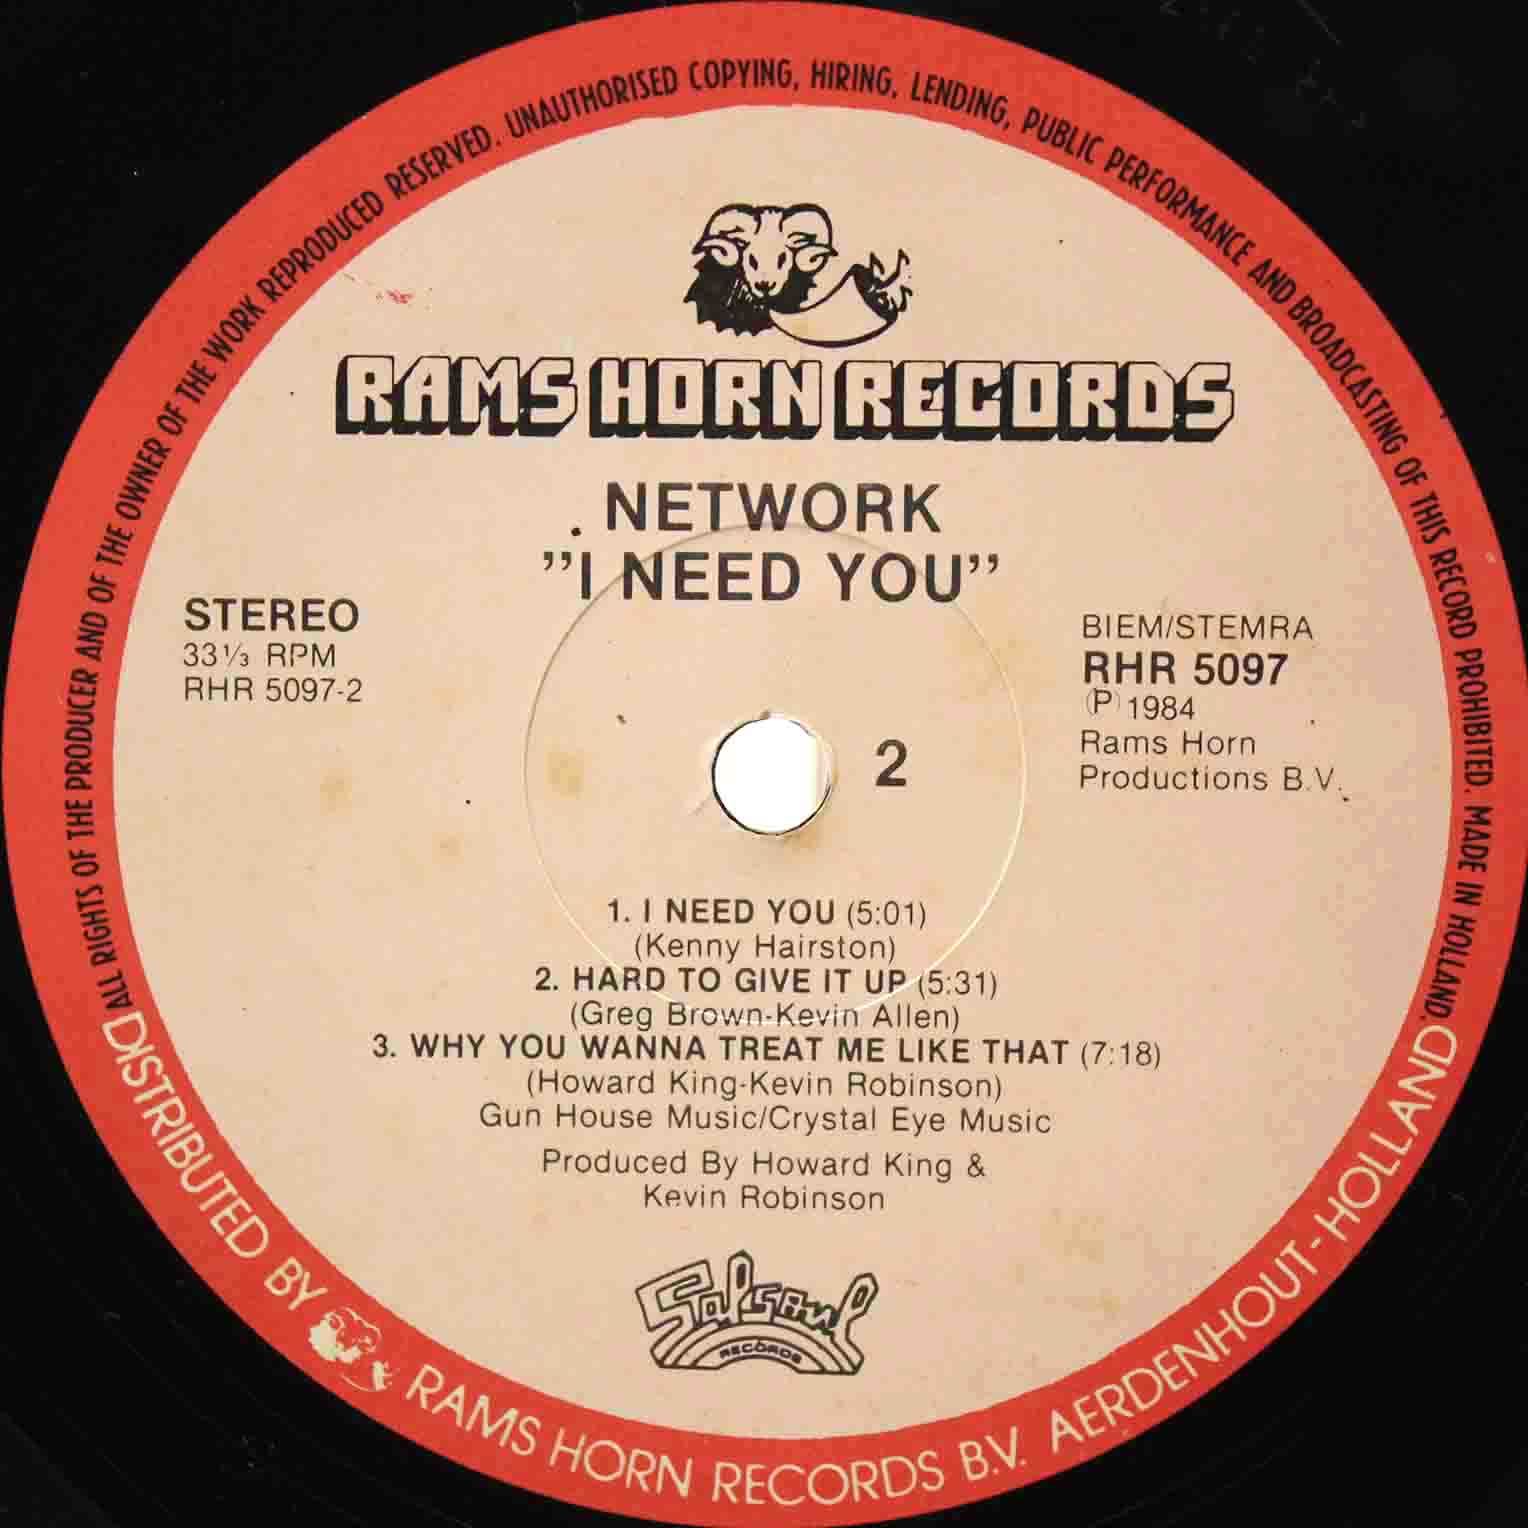 Network I Need You 04